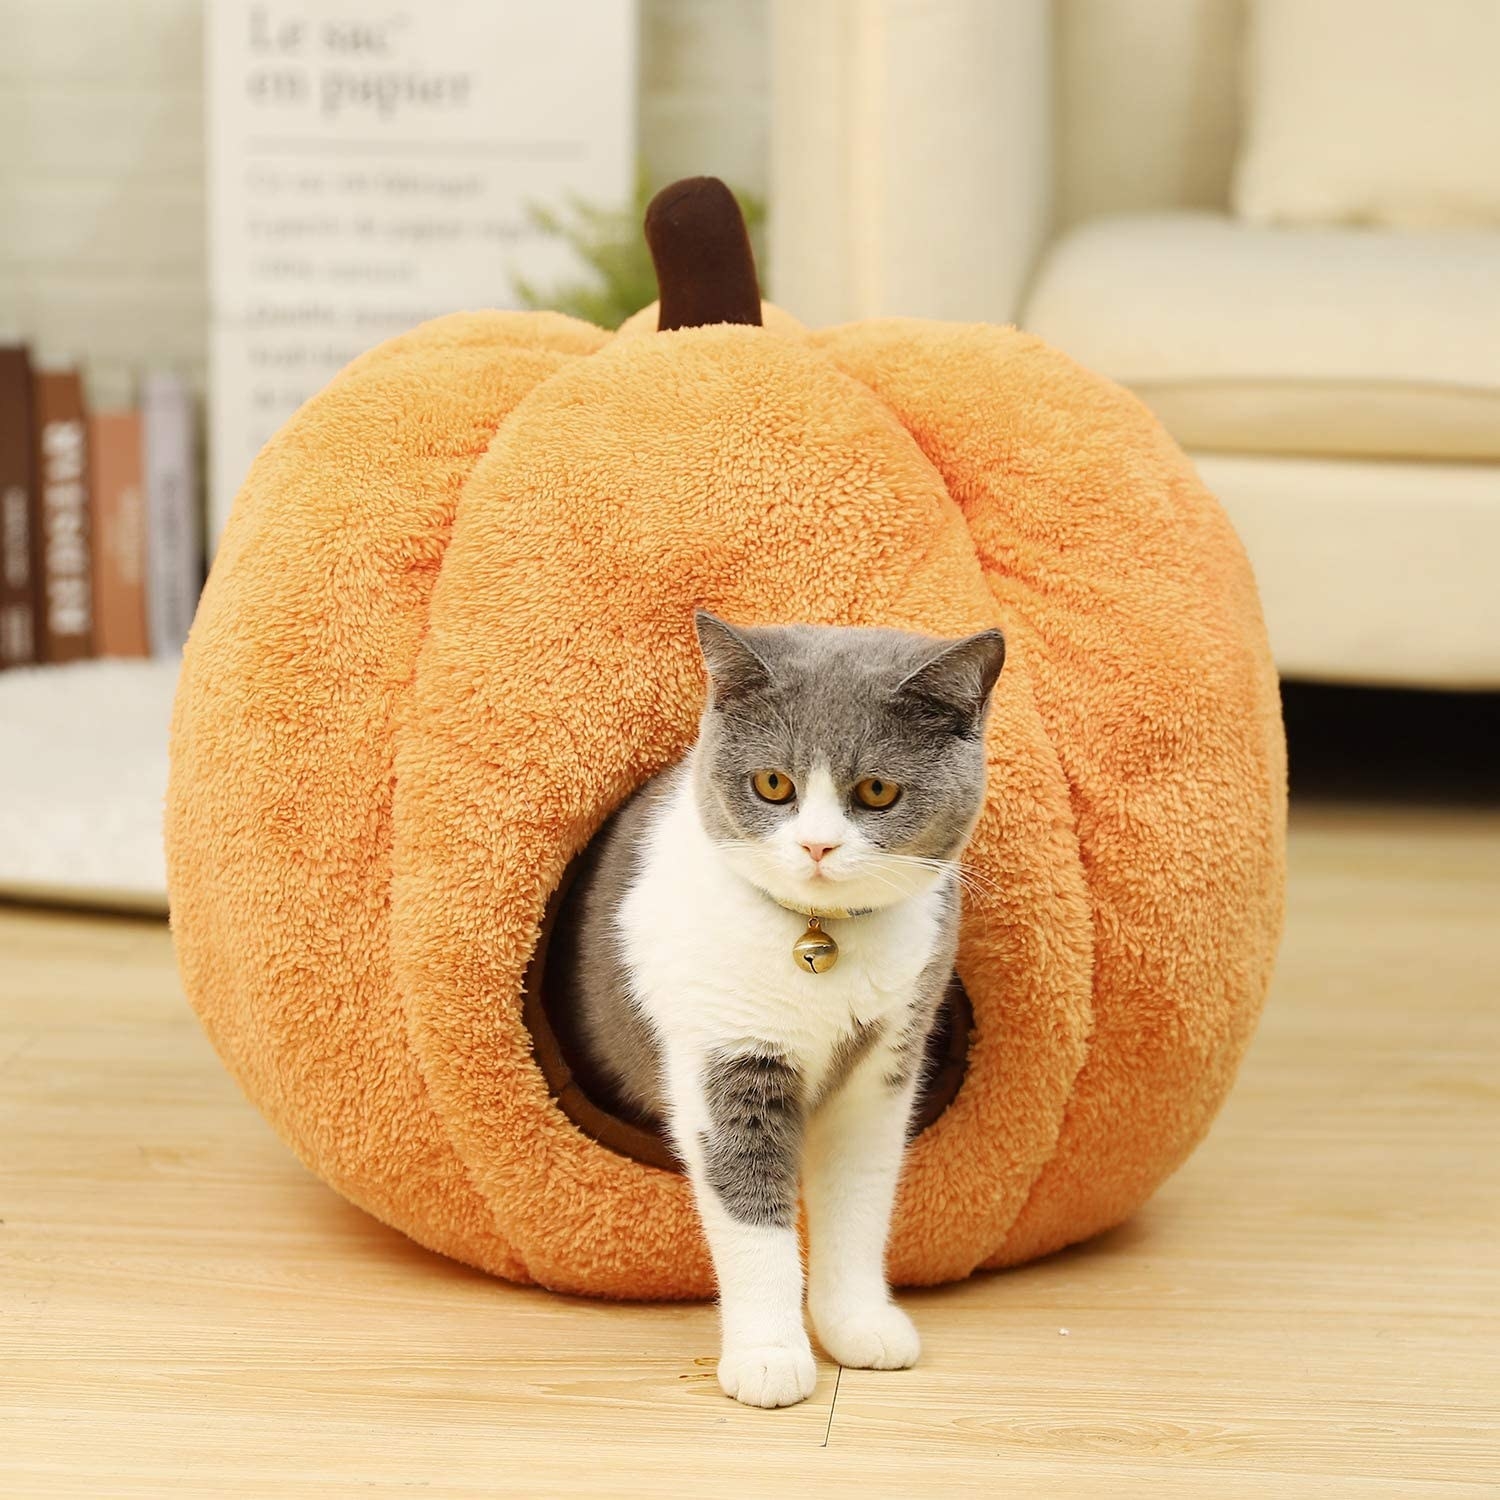 A cat emerges from a pumpkin shaped pet home